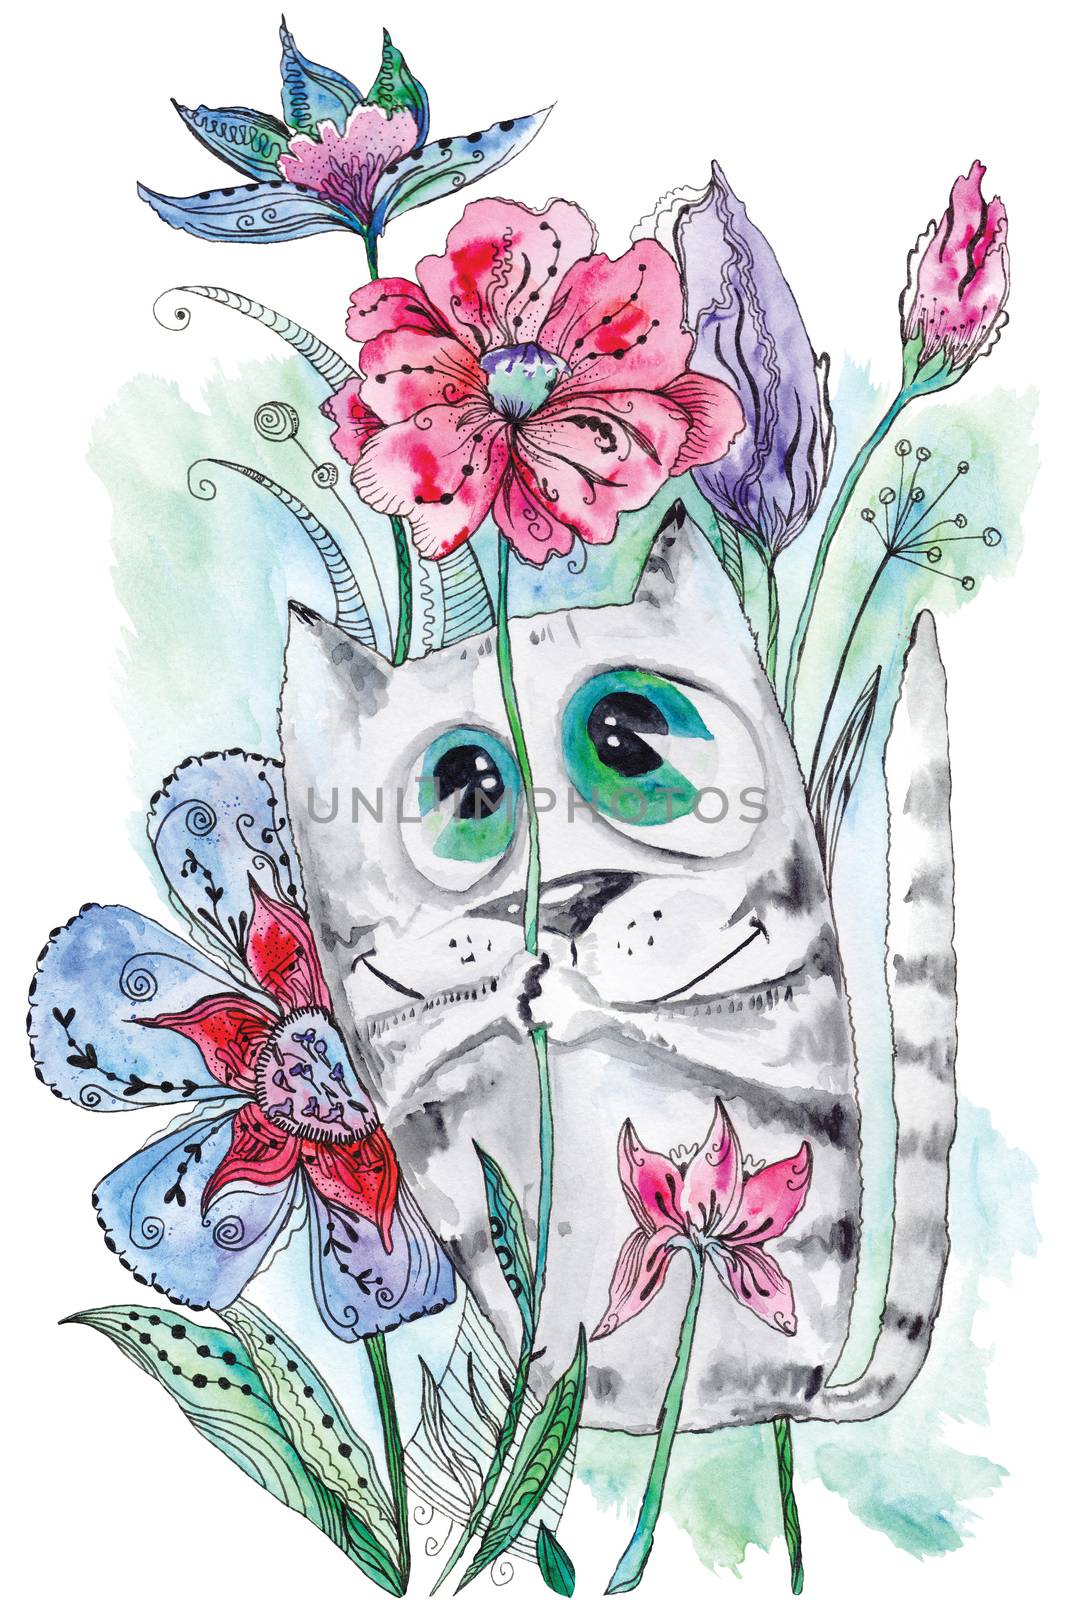 Summer illustration with kitten with large eyes holding poppy among magic flowers on white background